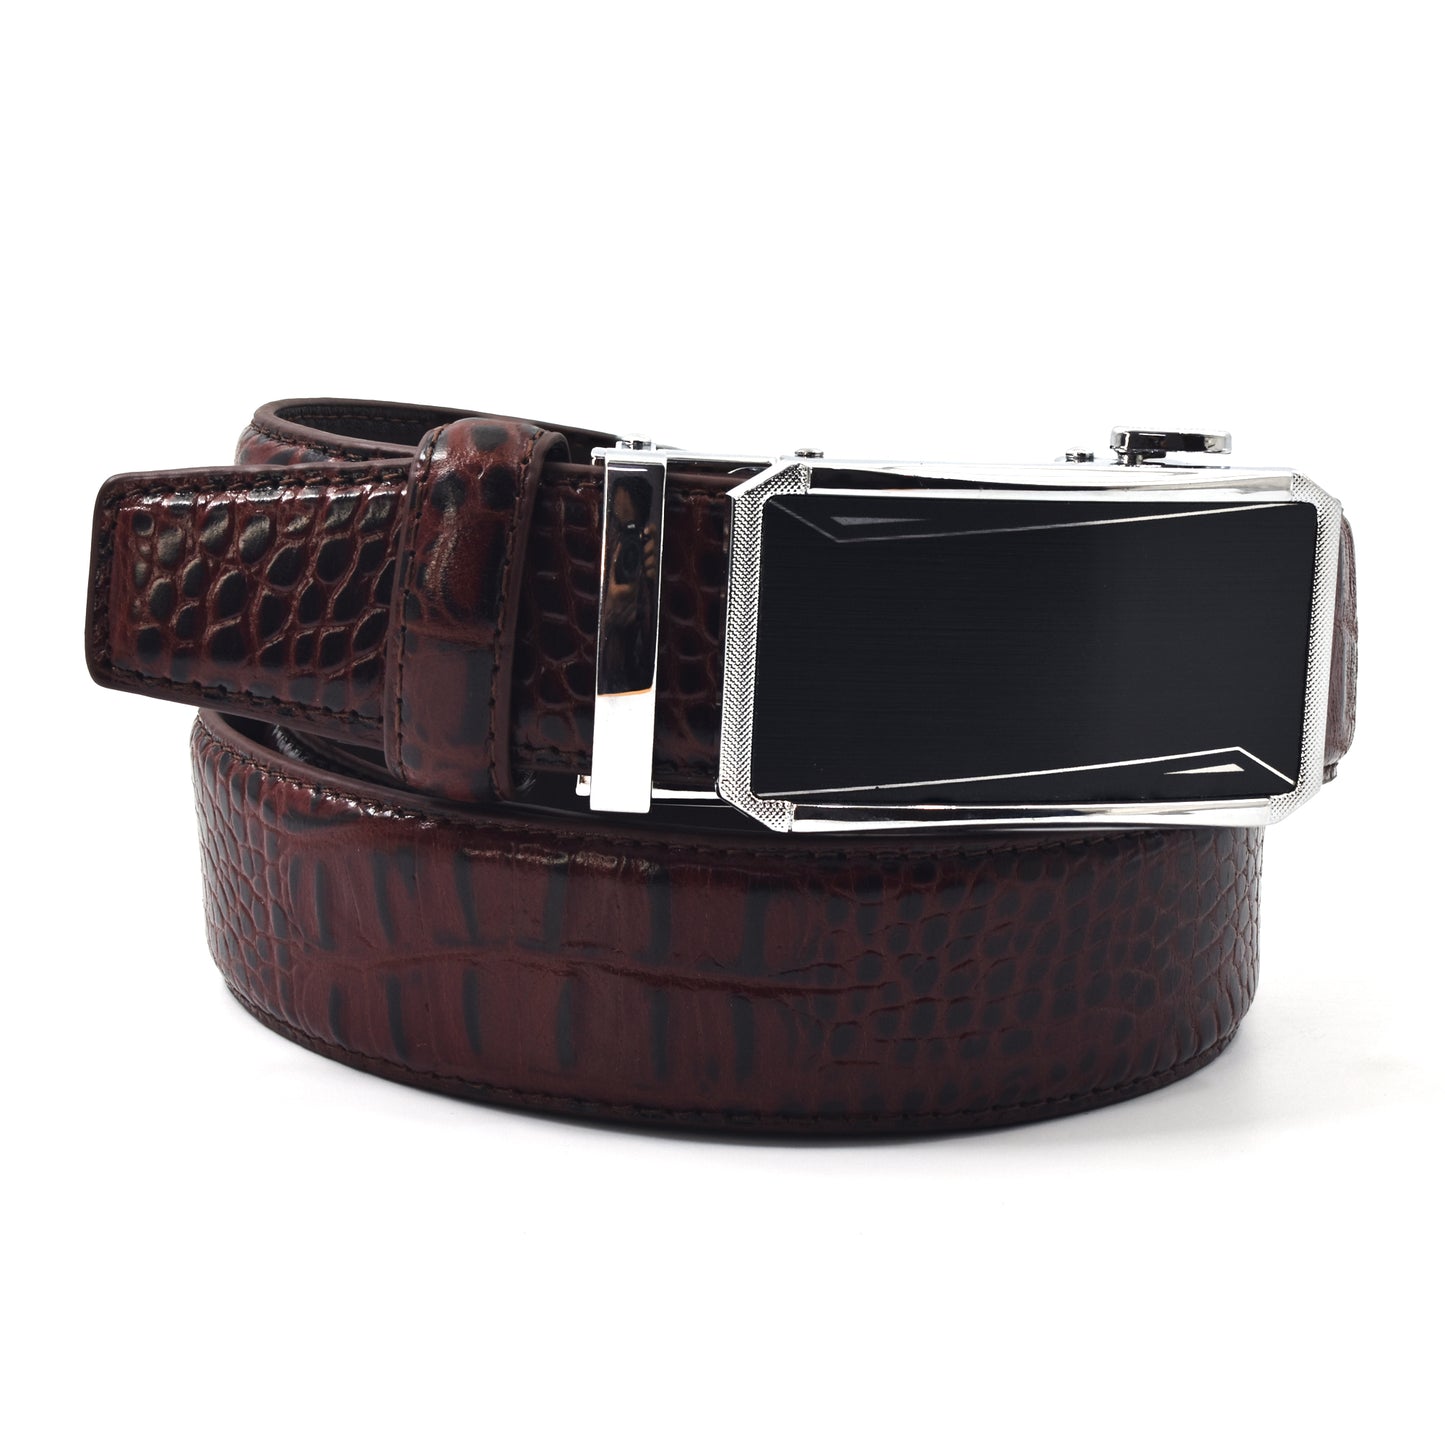 Gear Buckles | Original Leather | Premium Quality Belt | ORGN Belt 65